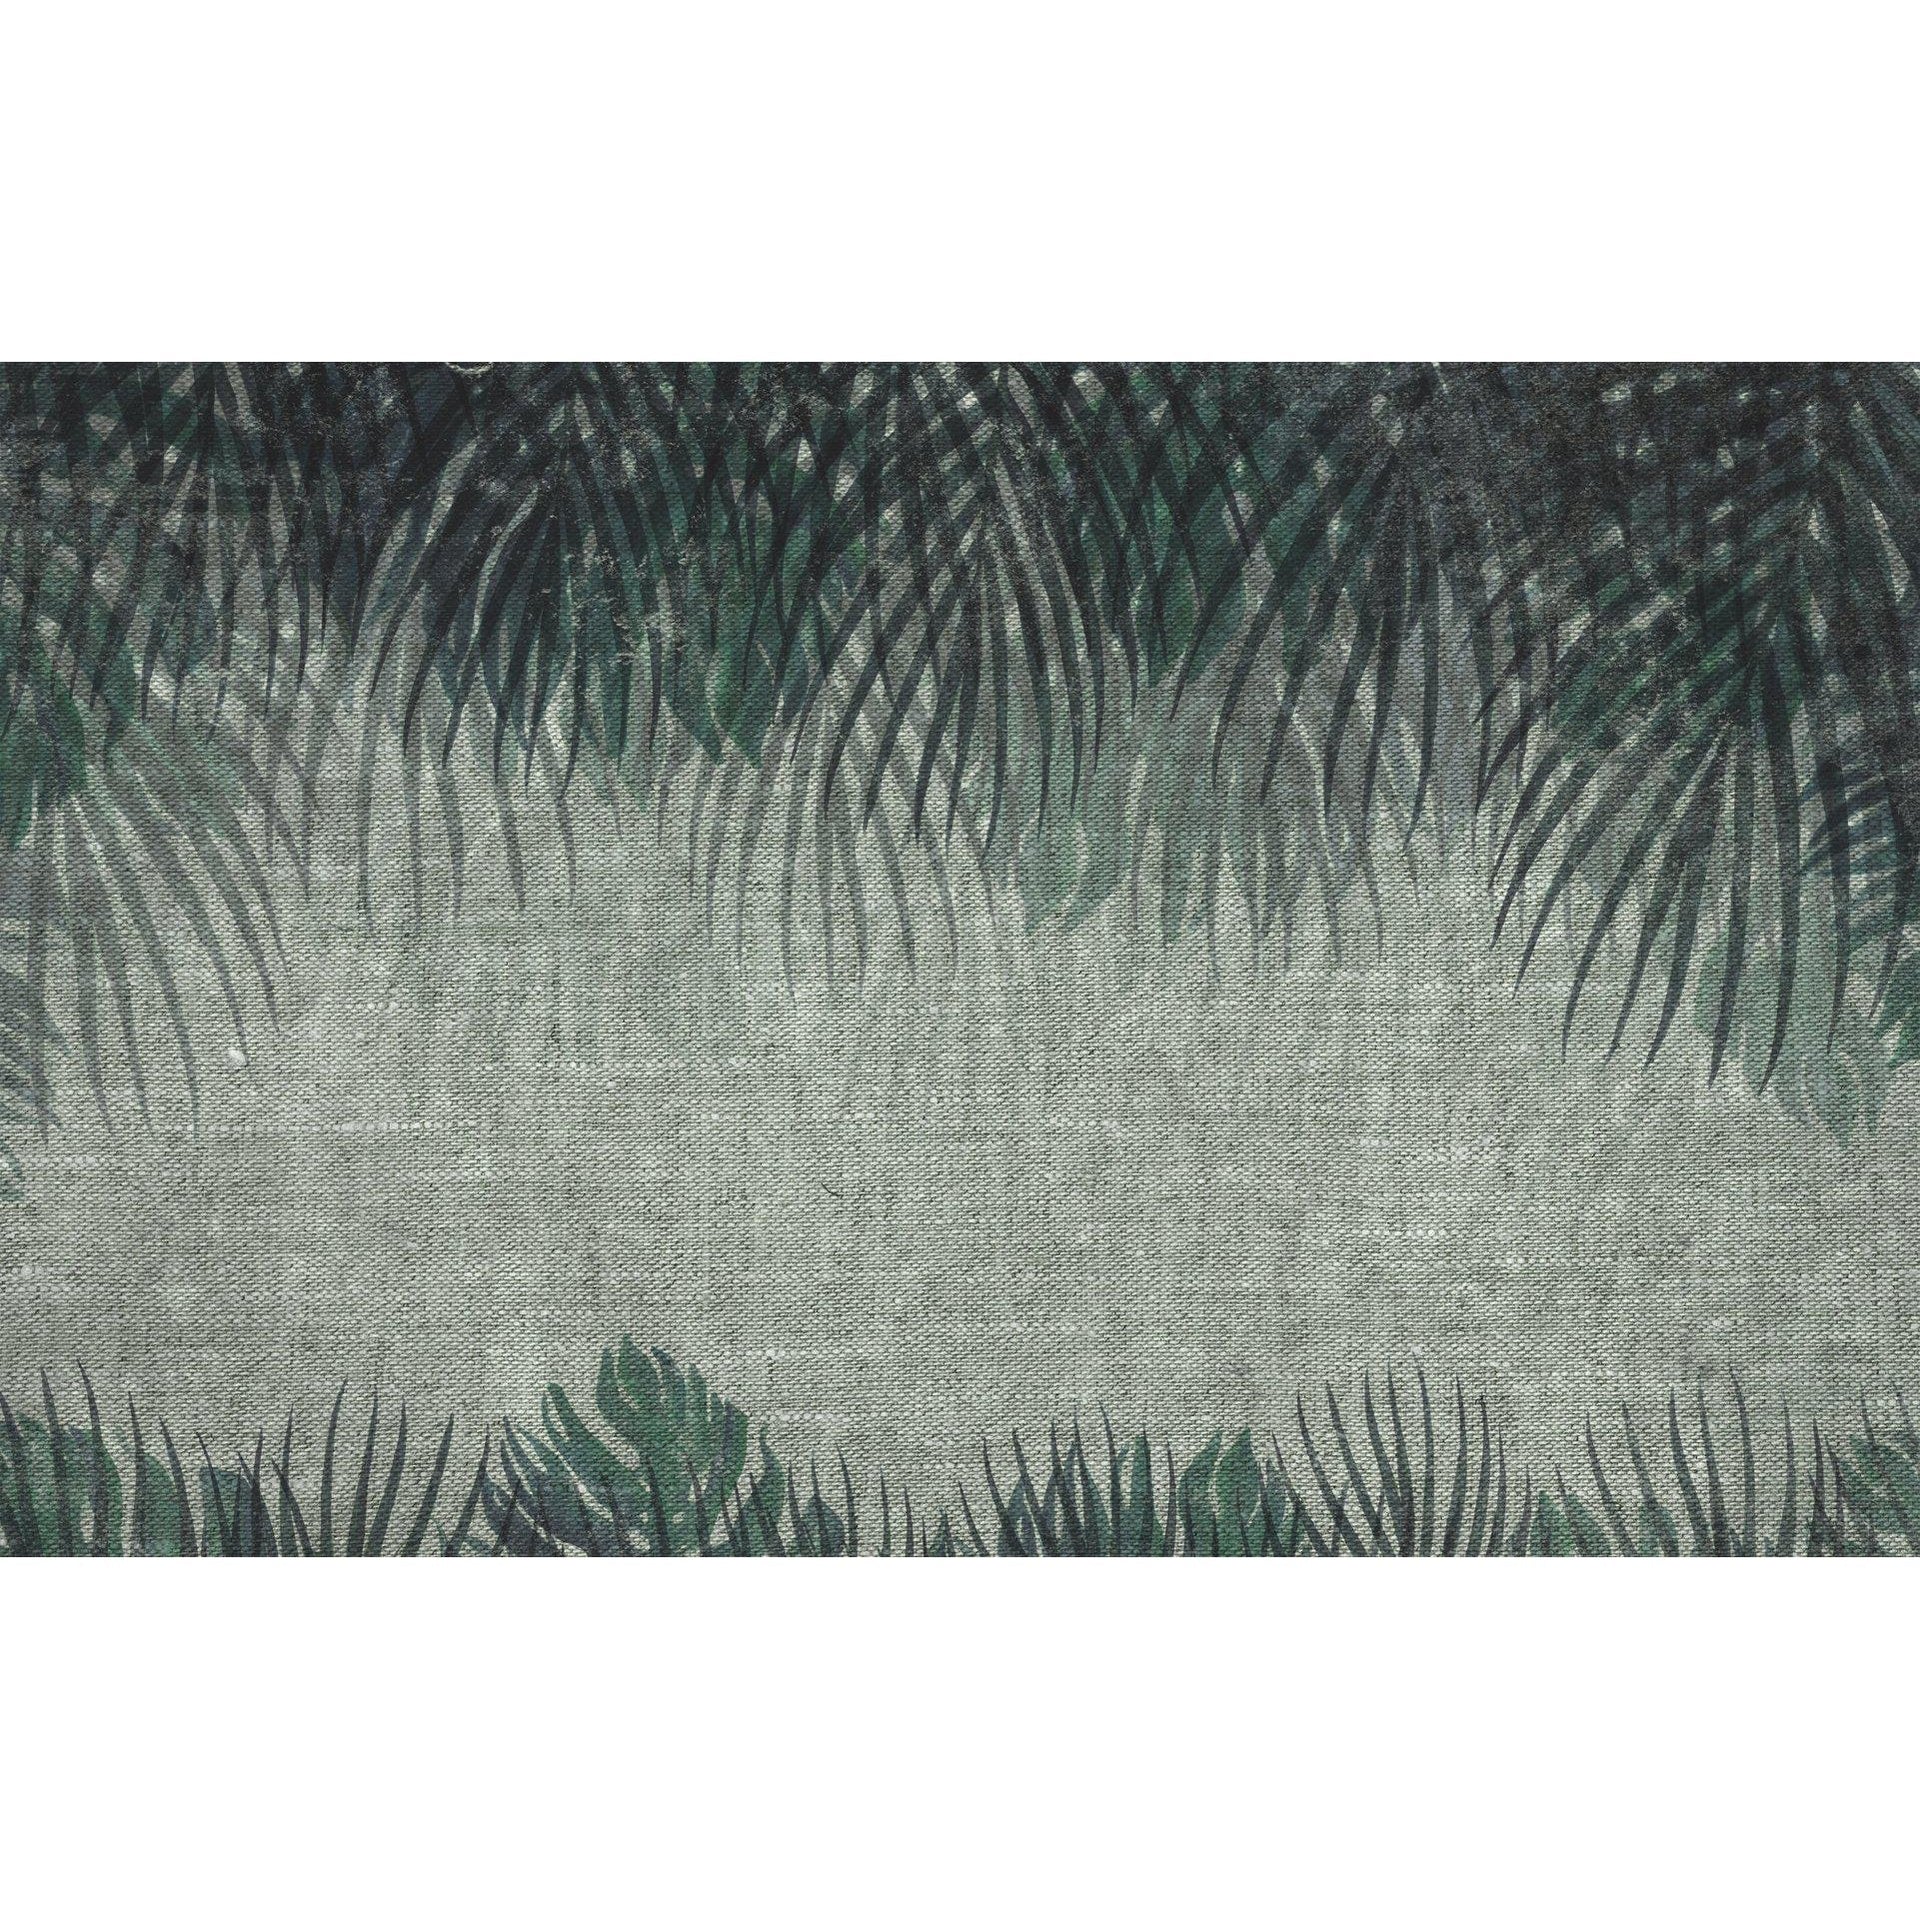 In The Fog-Digital Wallpaper-Skinwall-Green-30A